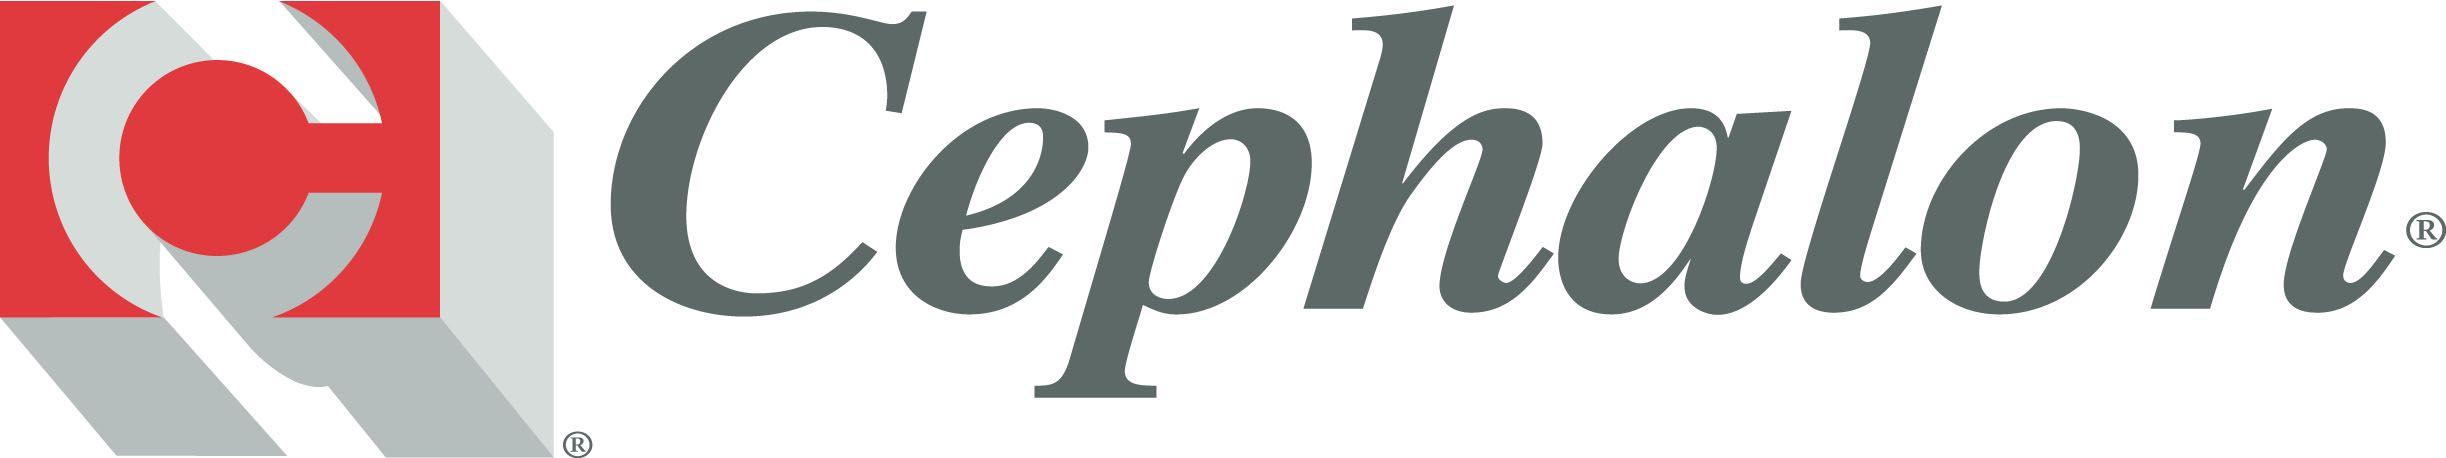 Cephalon Logo - Patent Docs: April 2009